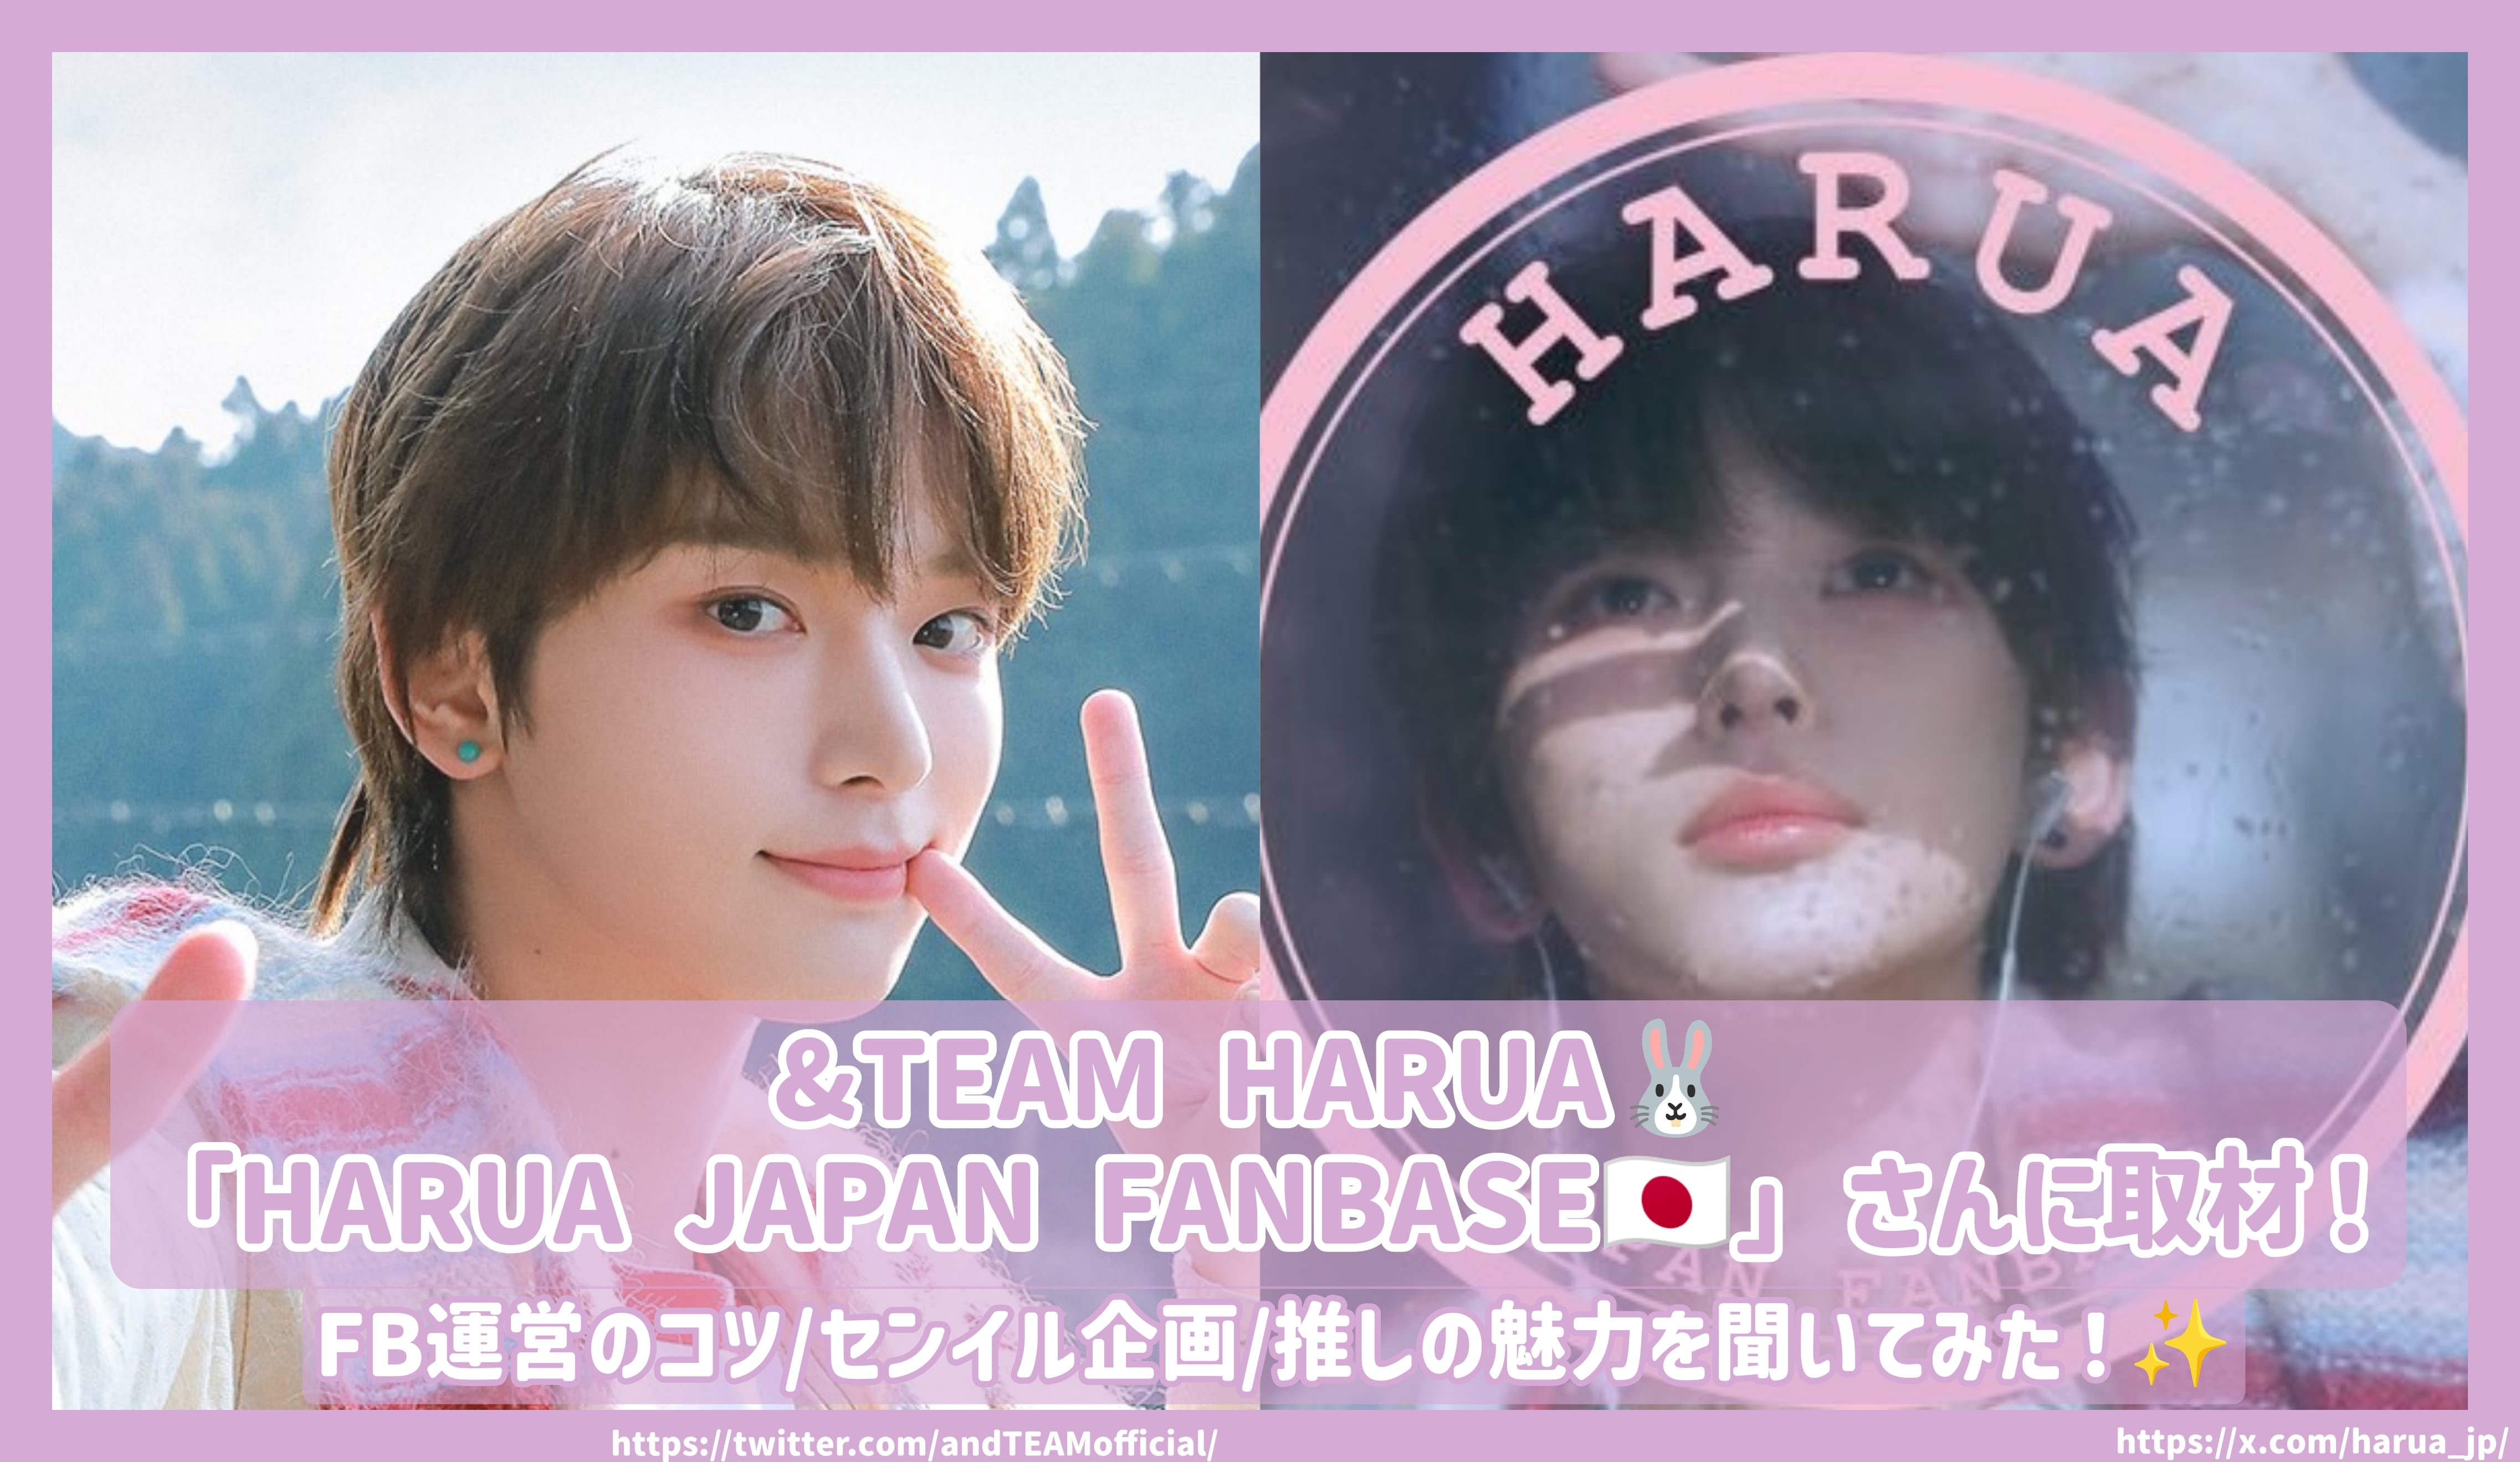 &TEAM HARUA「HARUA JAPAN FANBASE」さんに取材！FB運営 